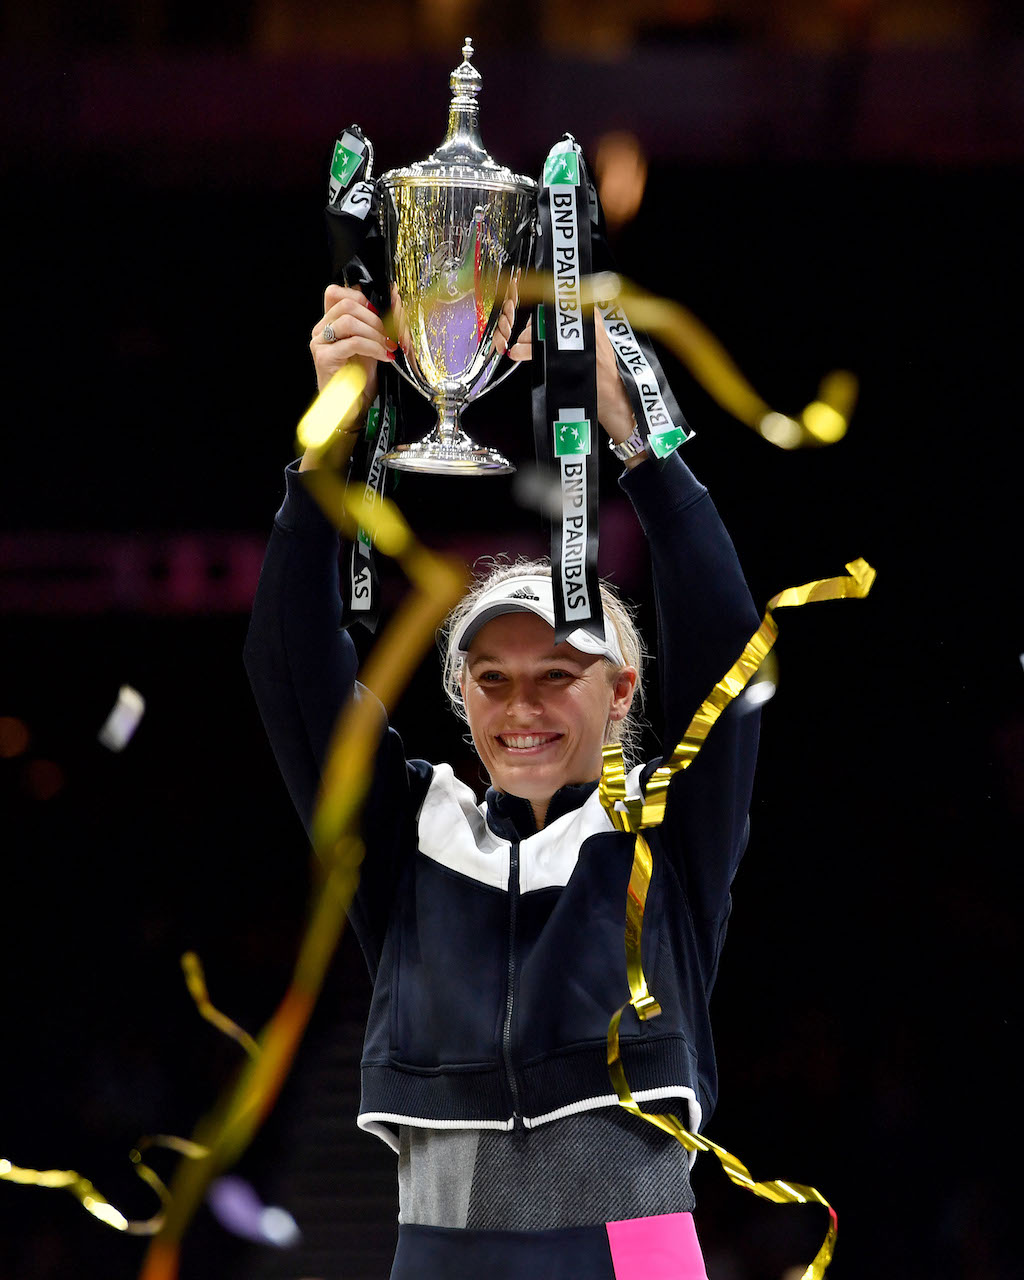 WTA Finals Singapore 2017 Champion Caroline Wozniacki